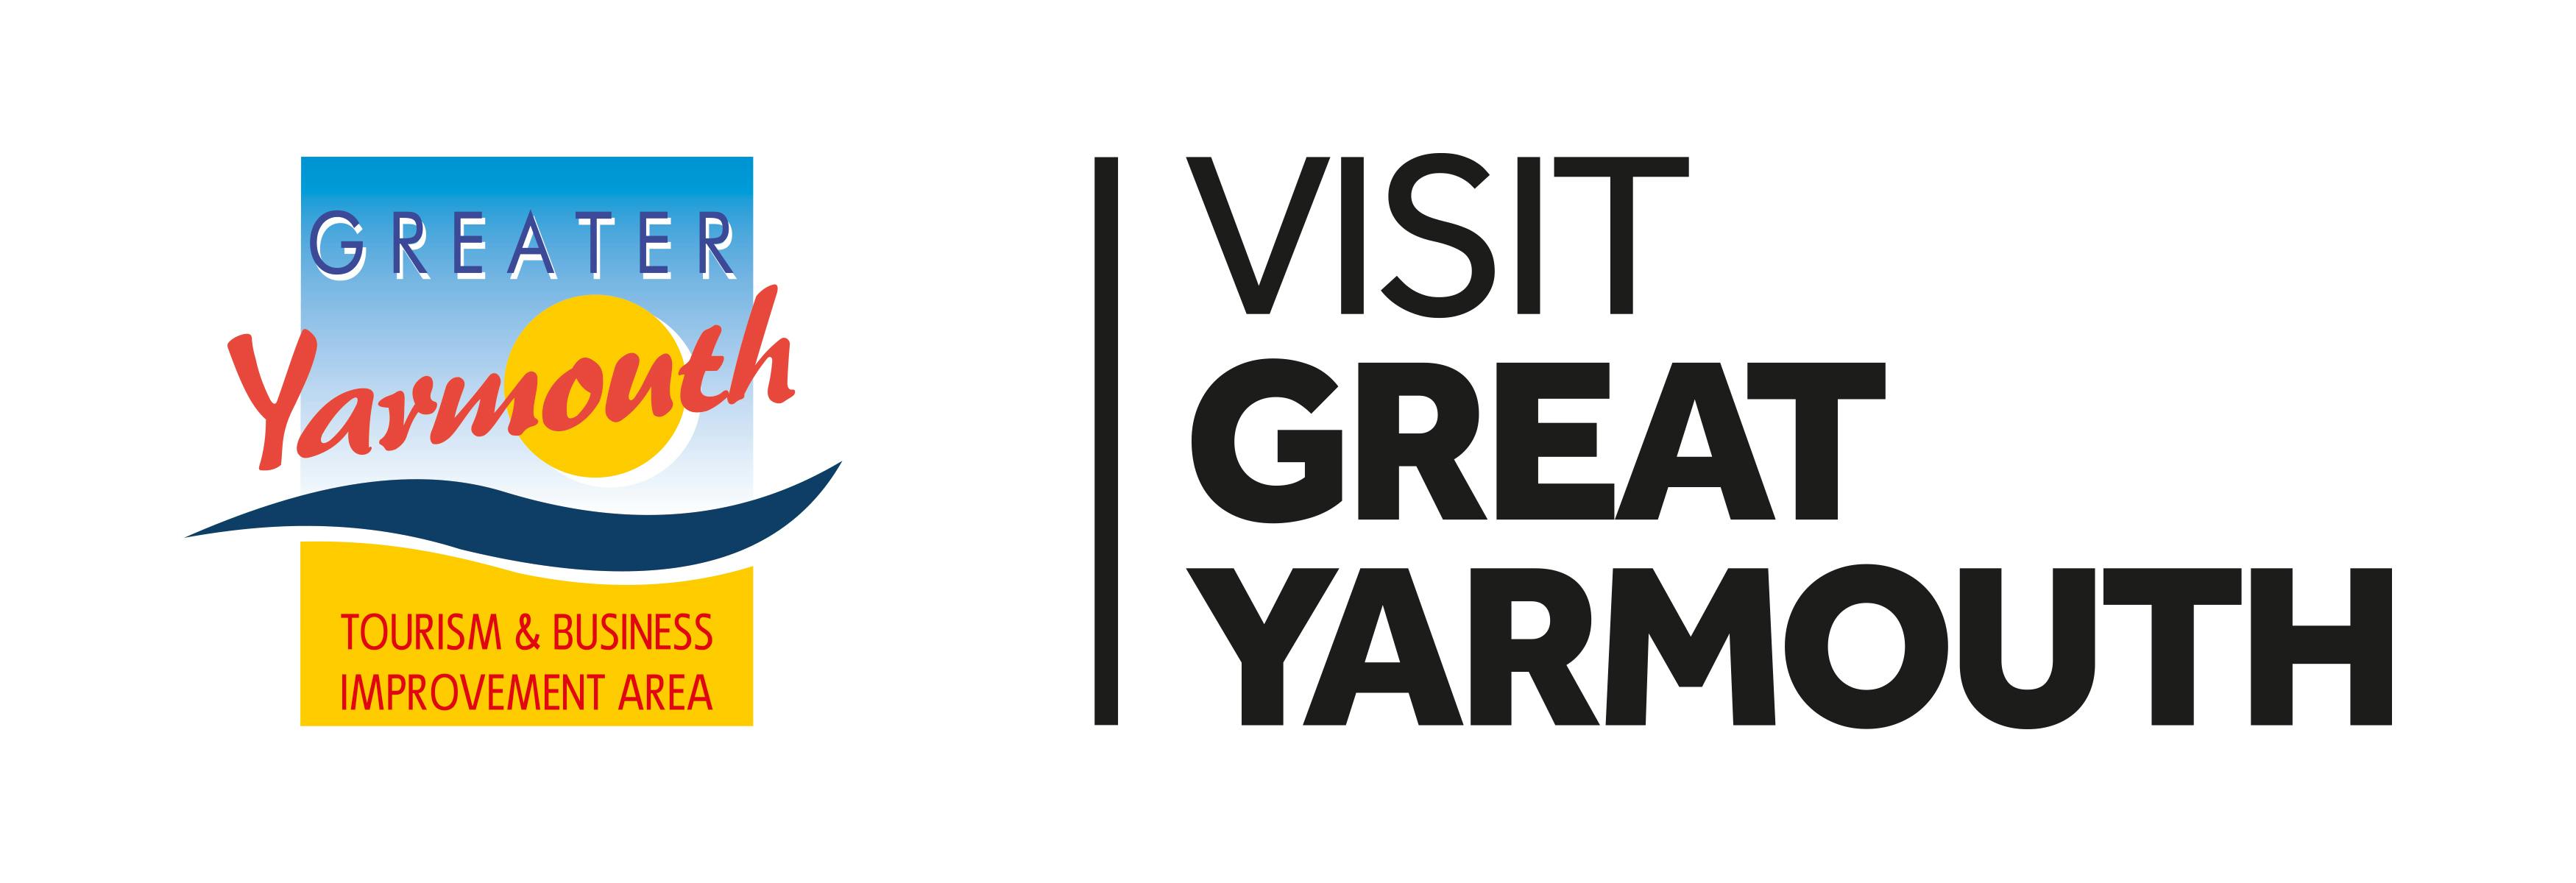 Visit Great Yarmouth logo